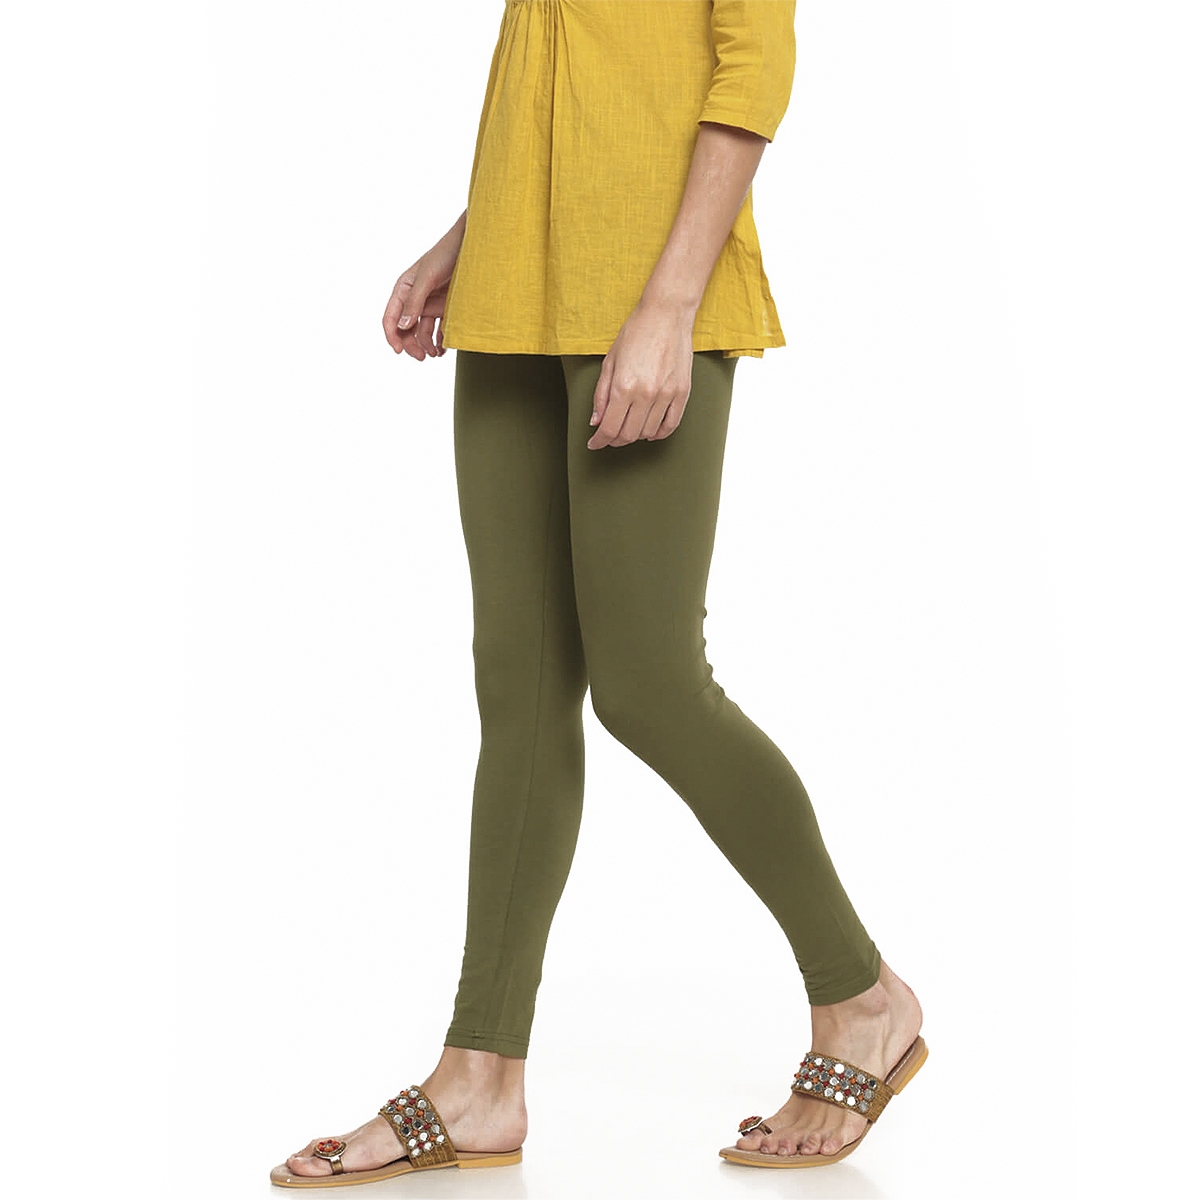 Go Colors Women Solid Color Ankle Length Legging - Olive Green